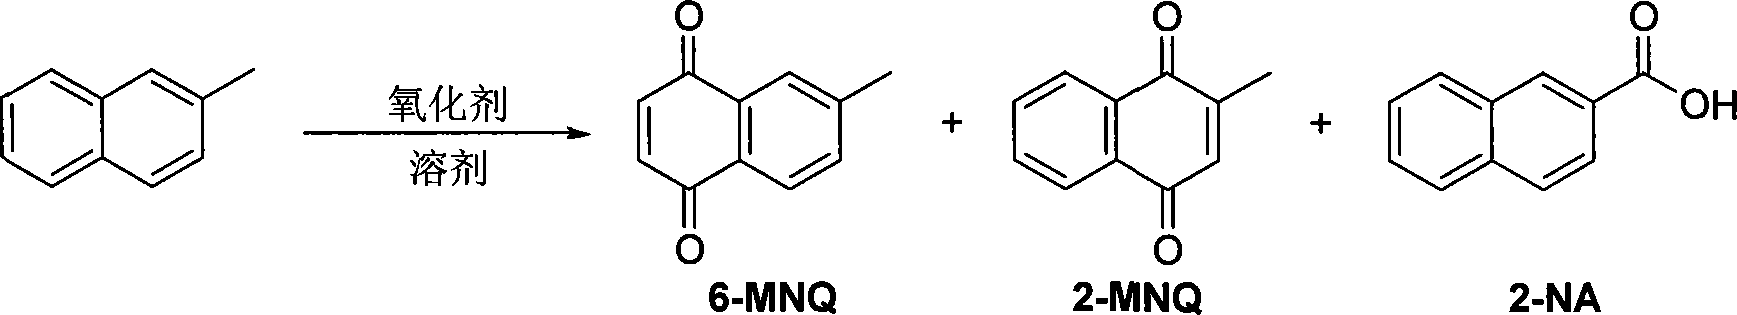 Process for preparing 2-methyl-1,4-naphthaquinoue using 2-methyl-naphthalene